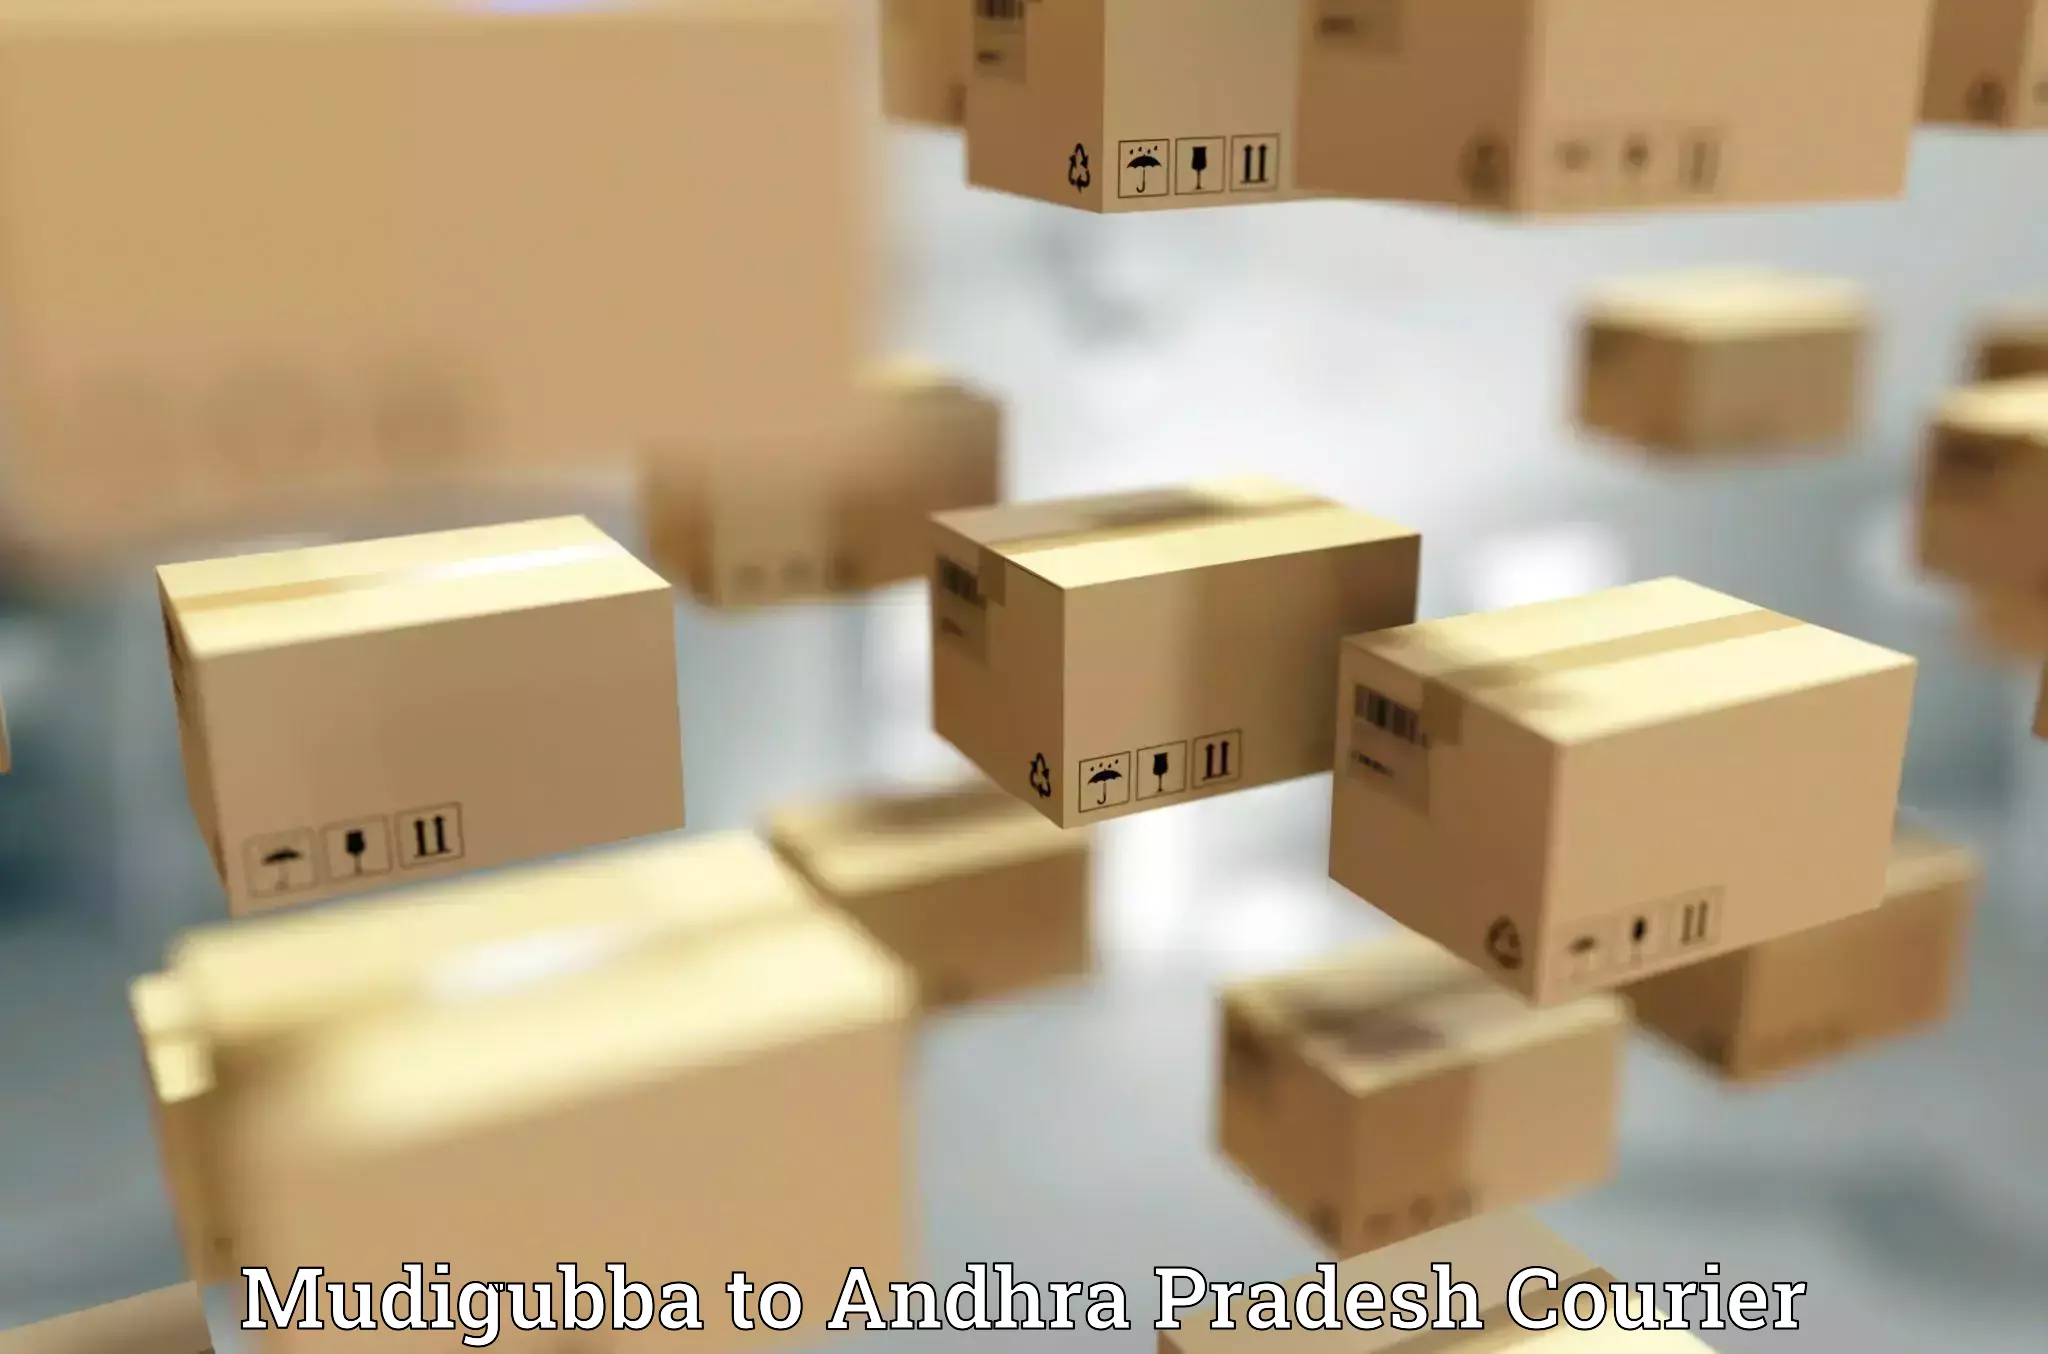 Global shipping networks Mudigubba to Andhra Pradesh